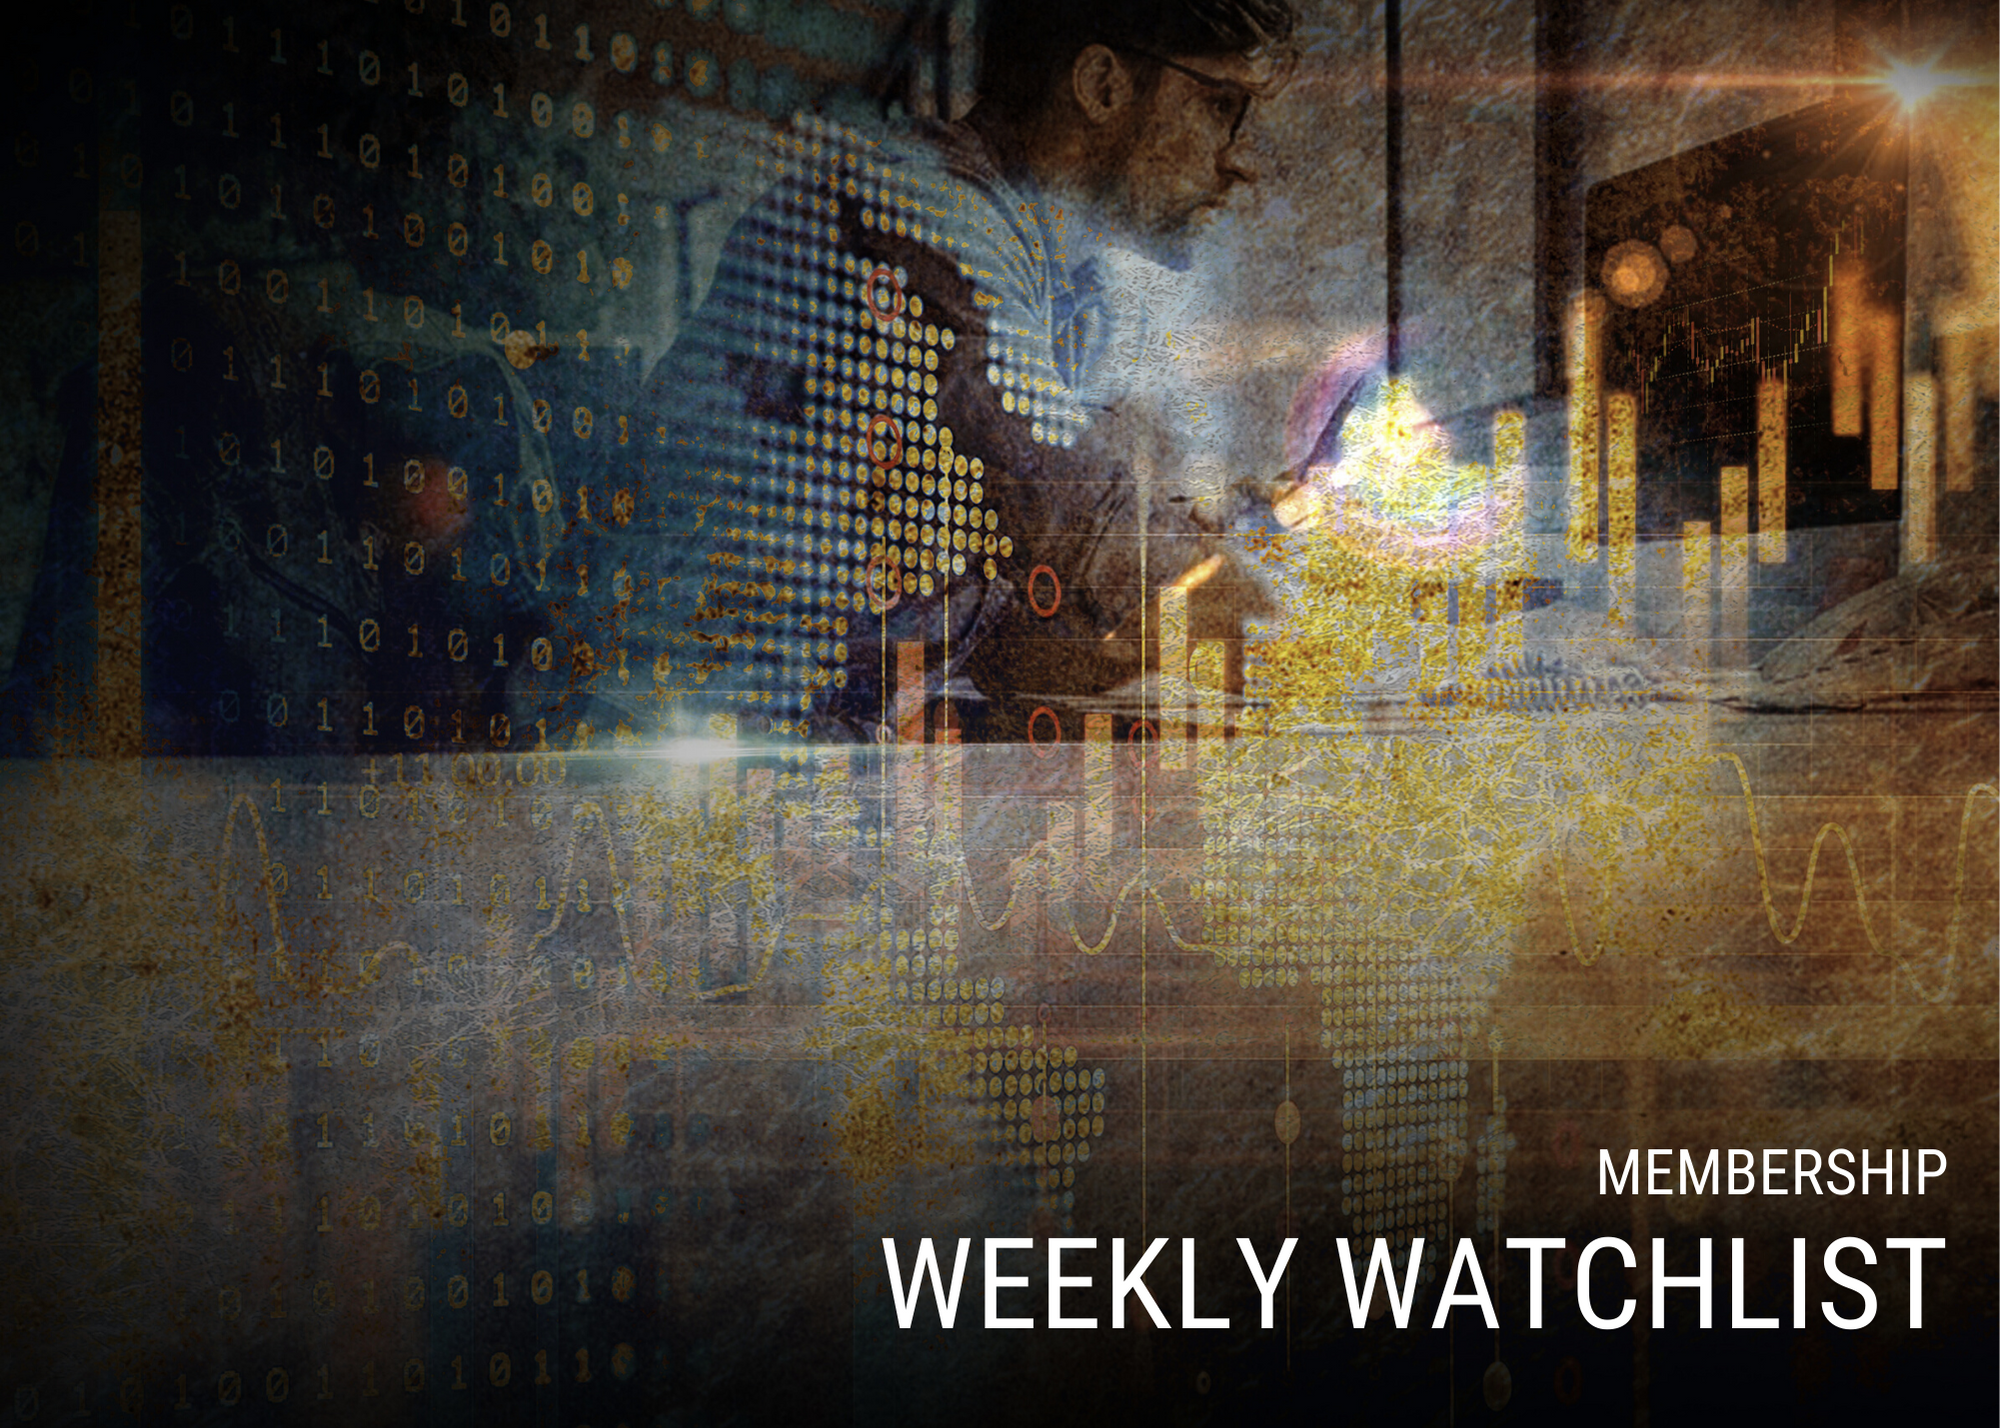 Weekly Watchlist